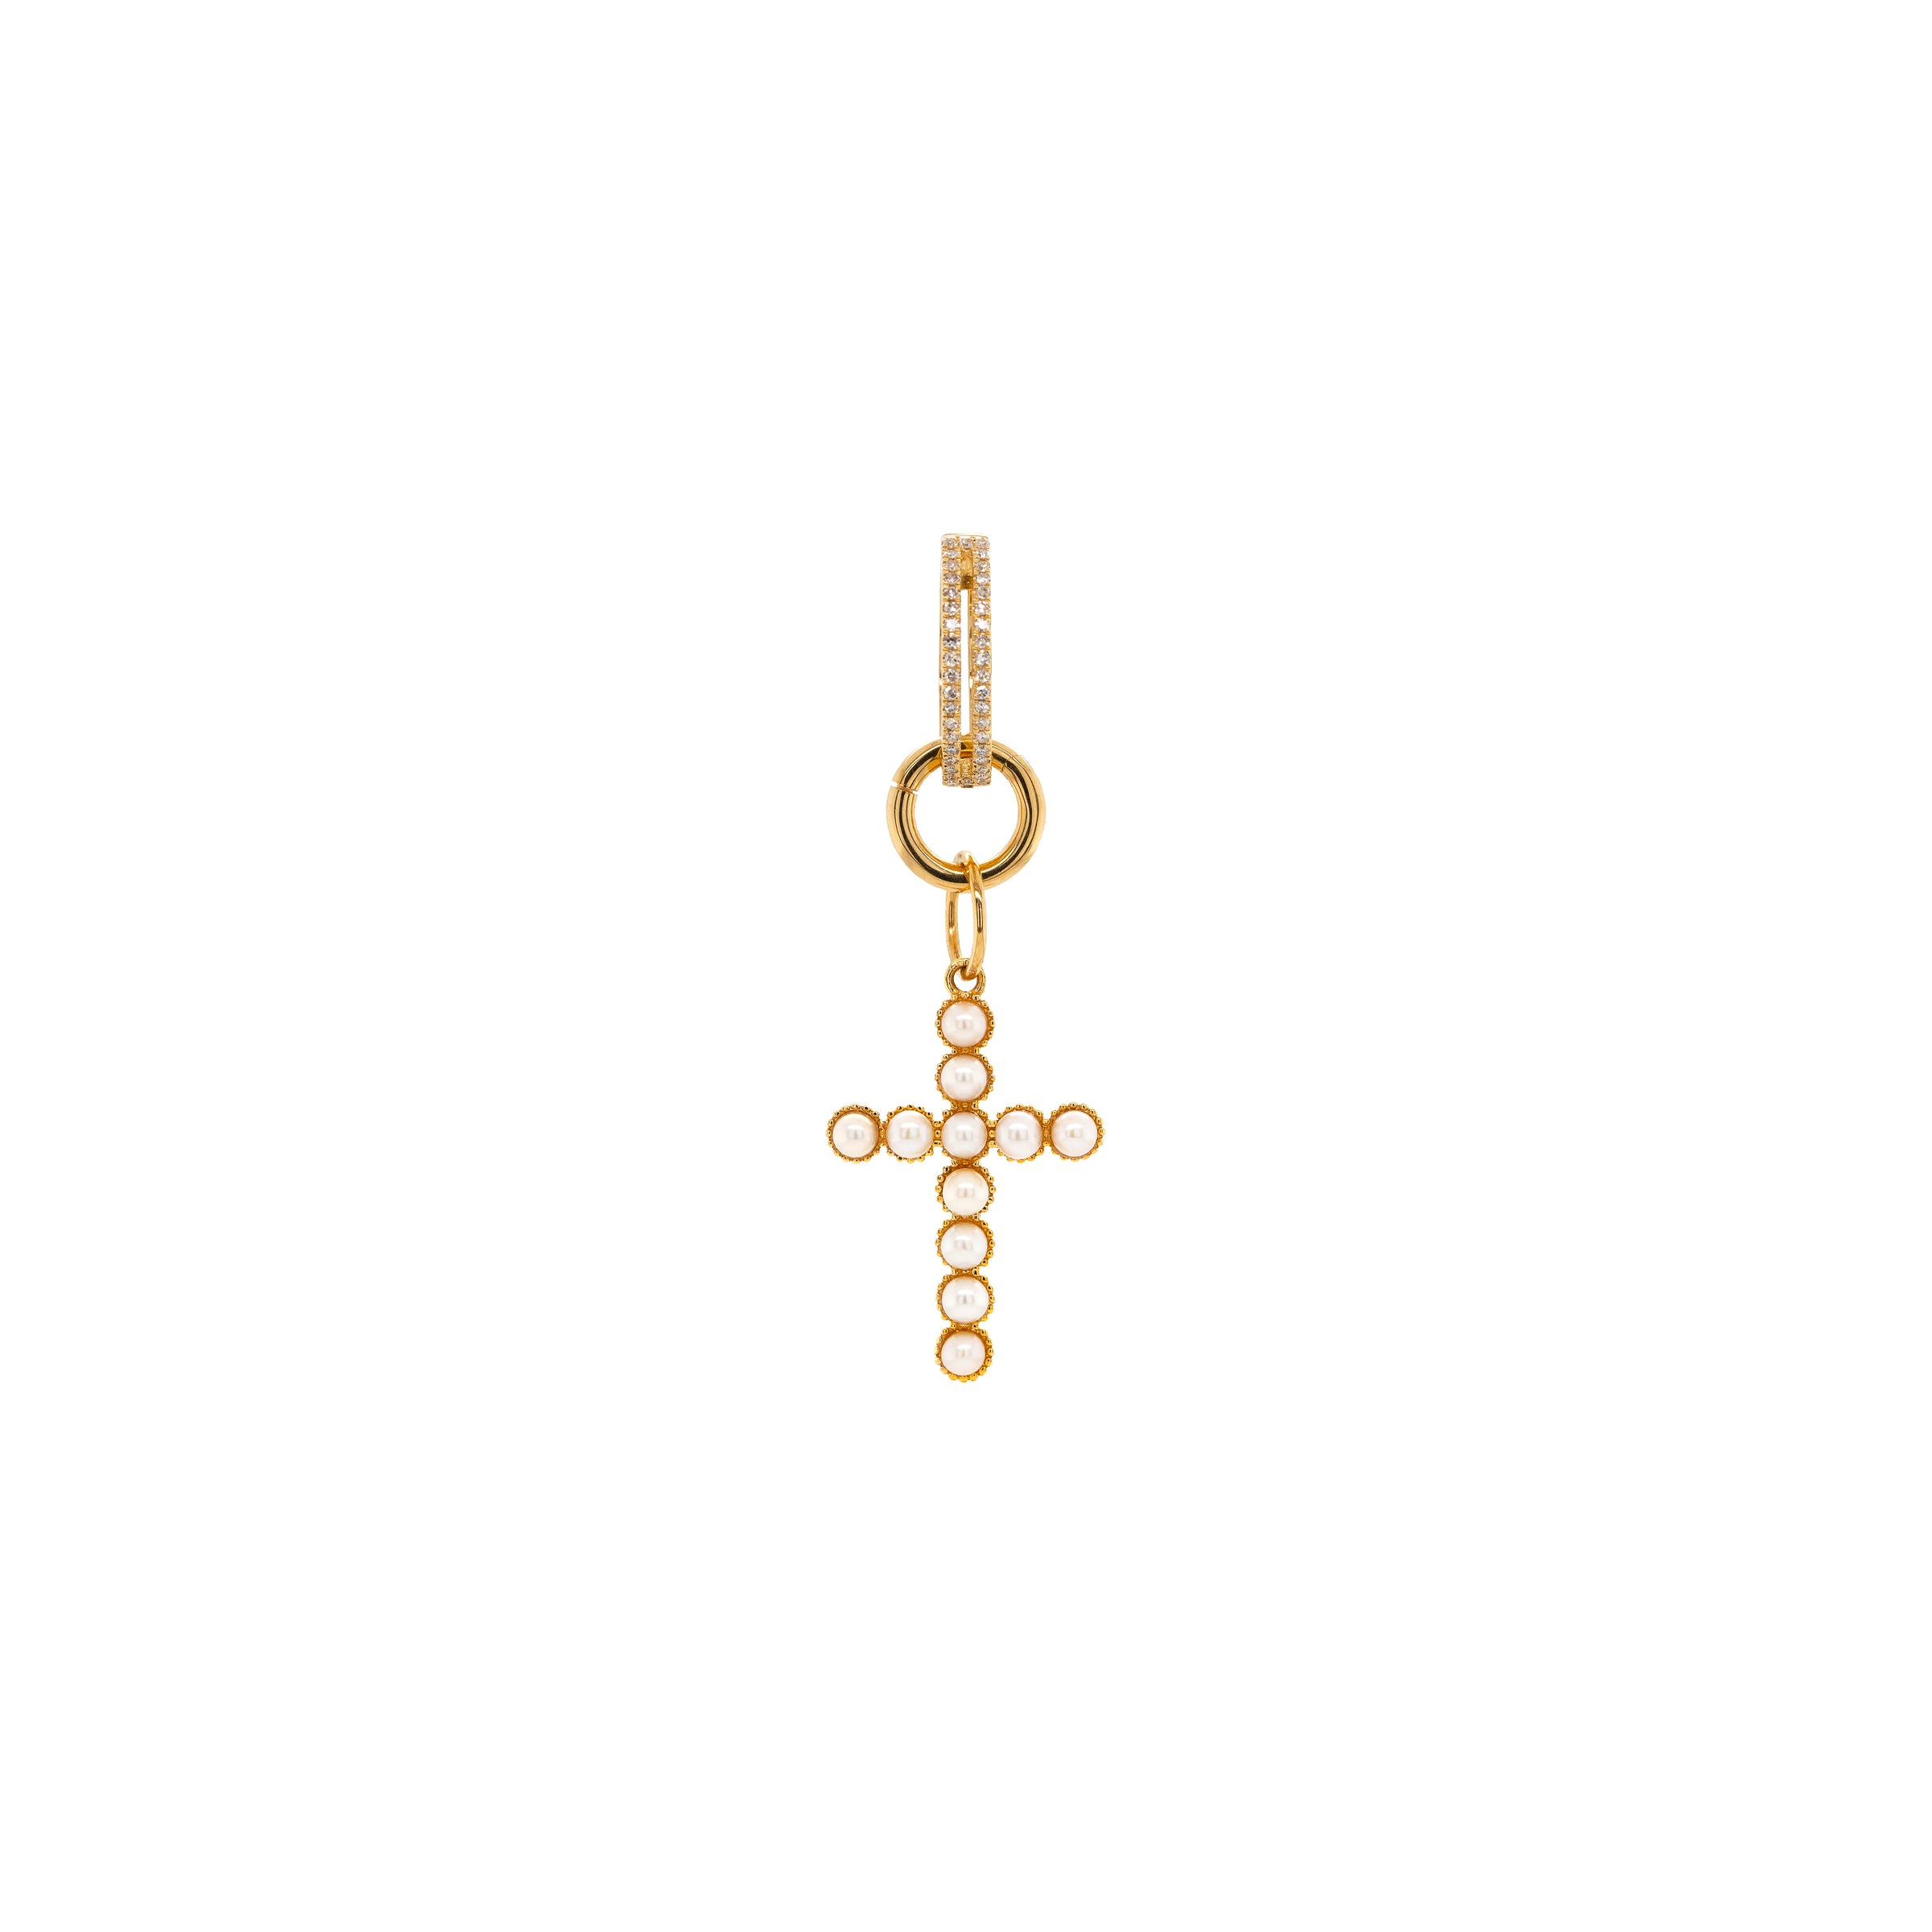 SMALL ROUND CHARM CLASP – Bridget King Jewelry